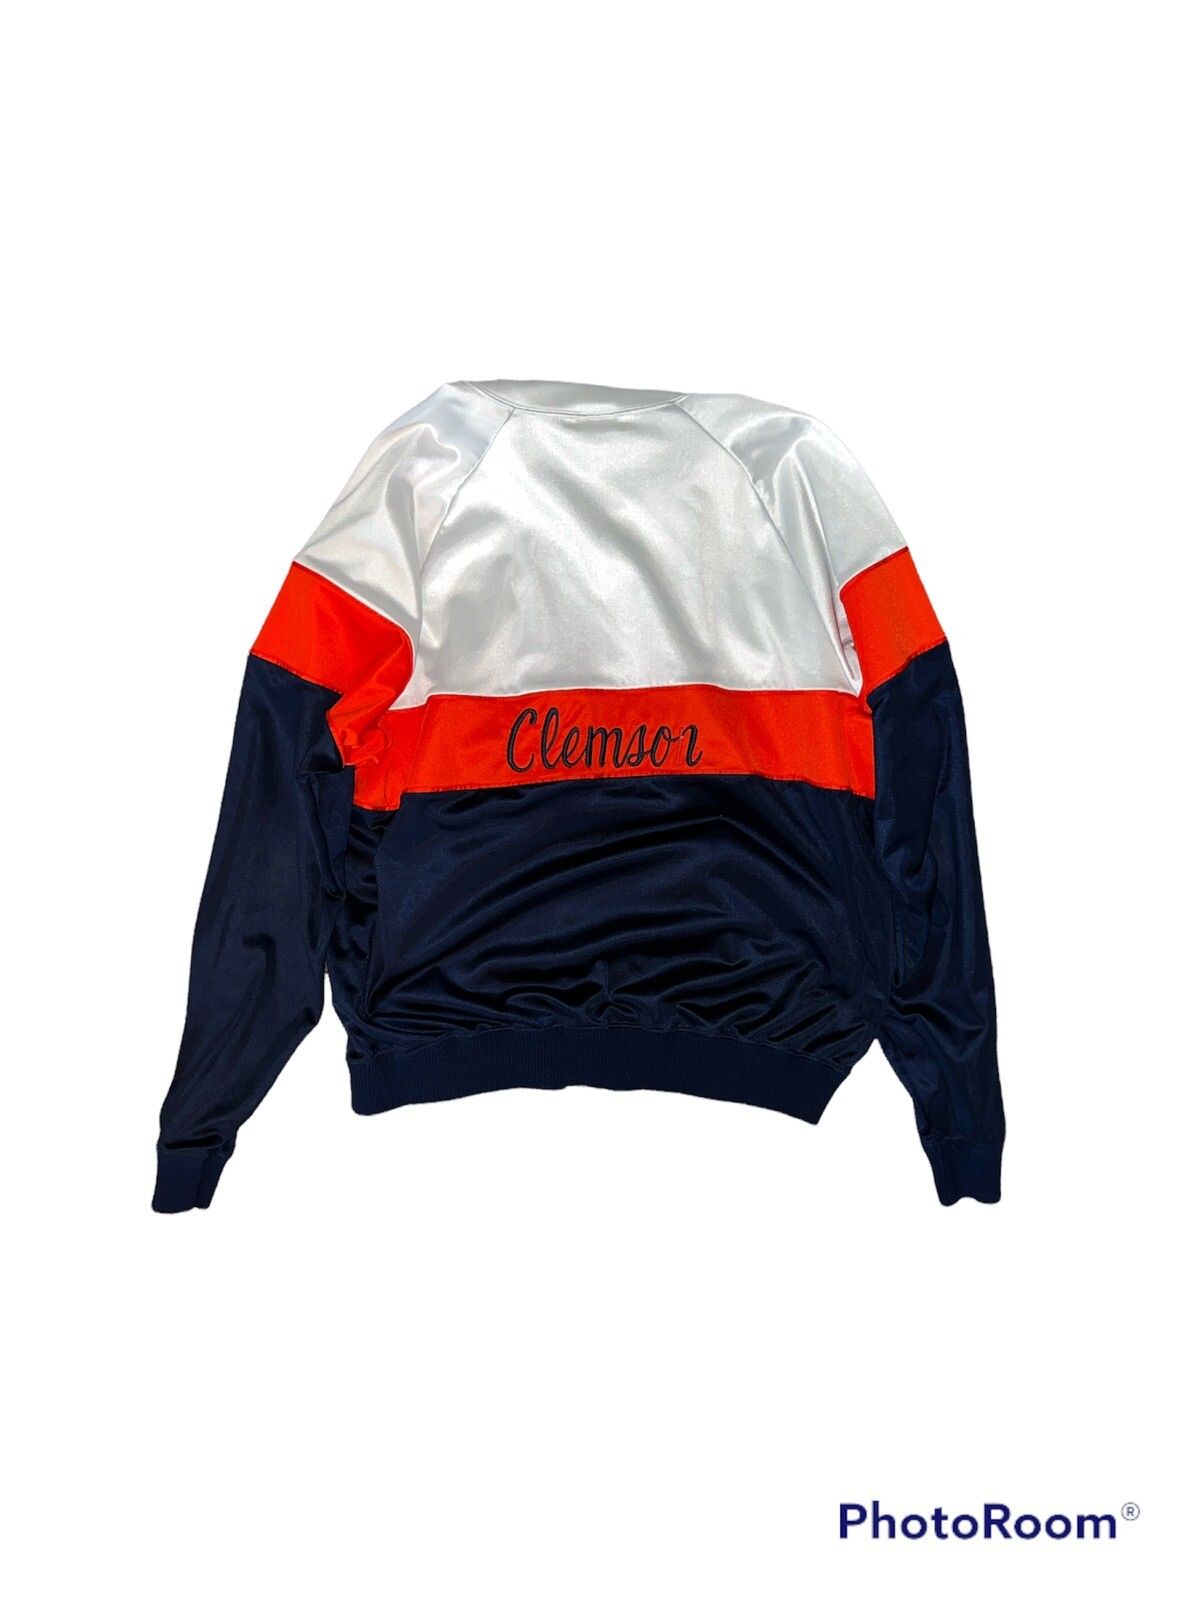 Vintage Champion Clemson Tigers Football Jacket Size US XXL / EU 58 / 5 - 5 Preview